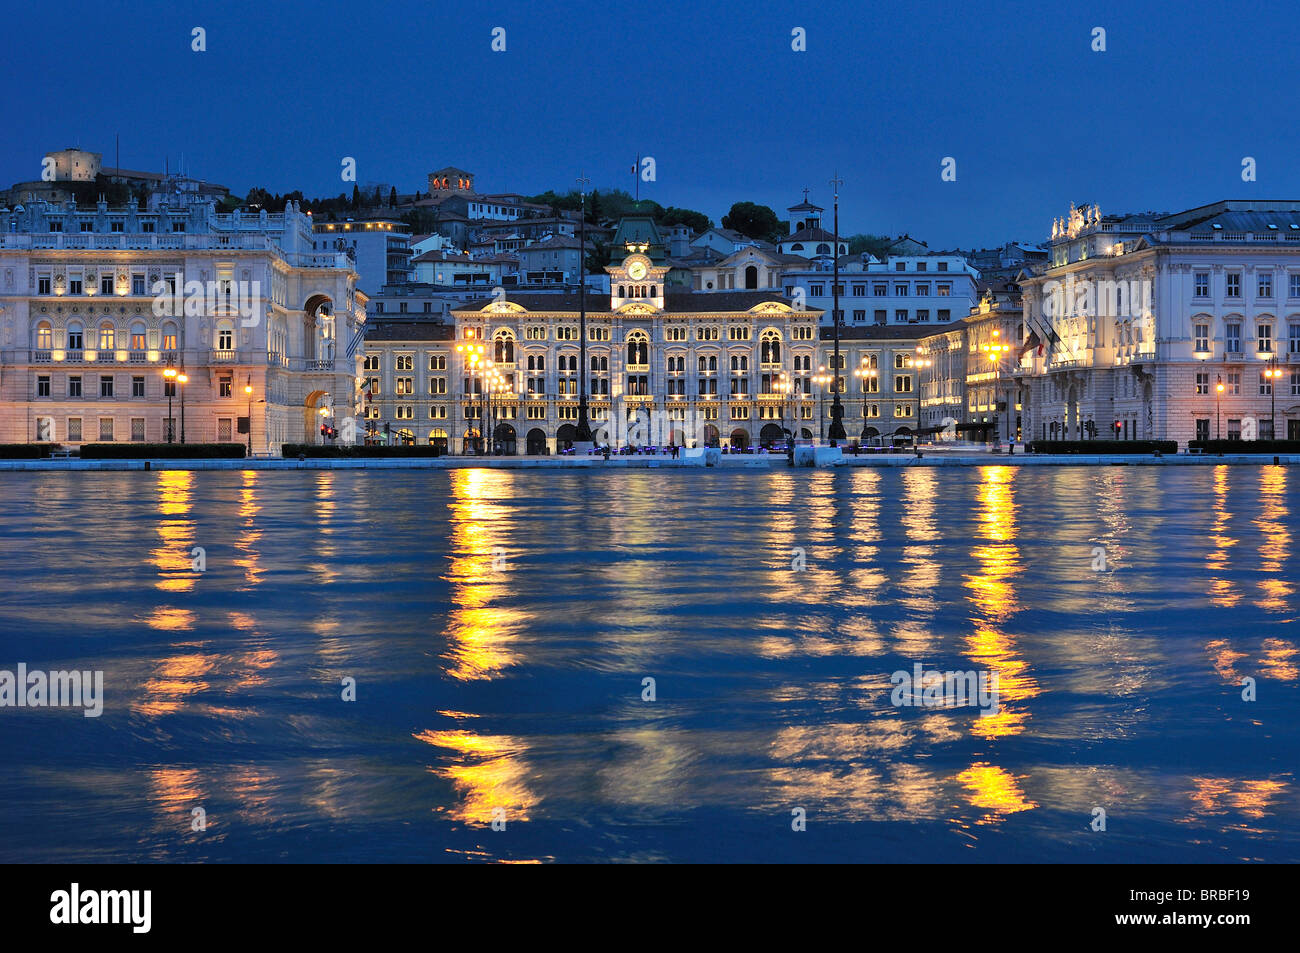 Trieste. Italy. View of Piazza dell'Unita d'Italia from the Molo Audace. Stock Photo